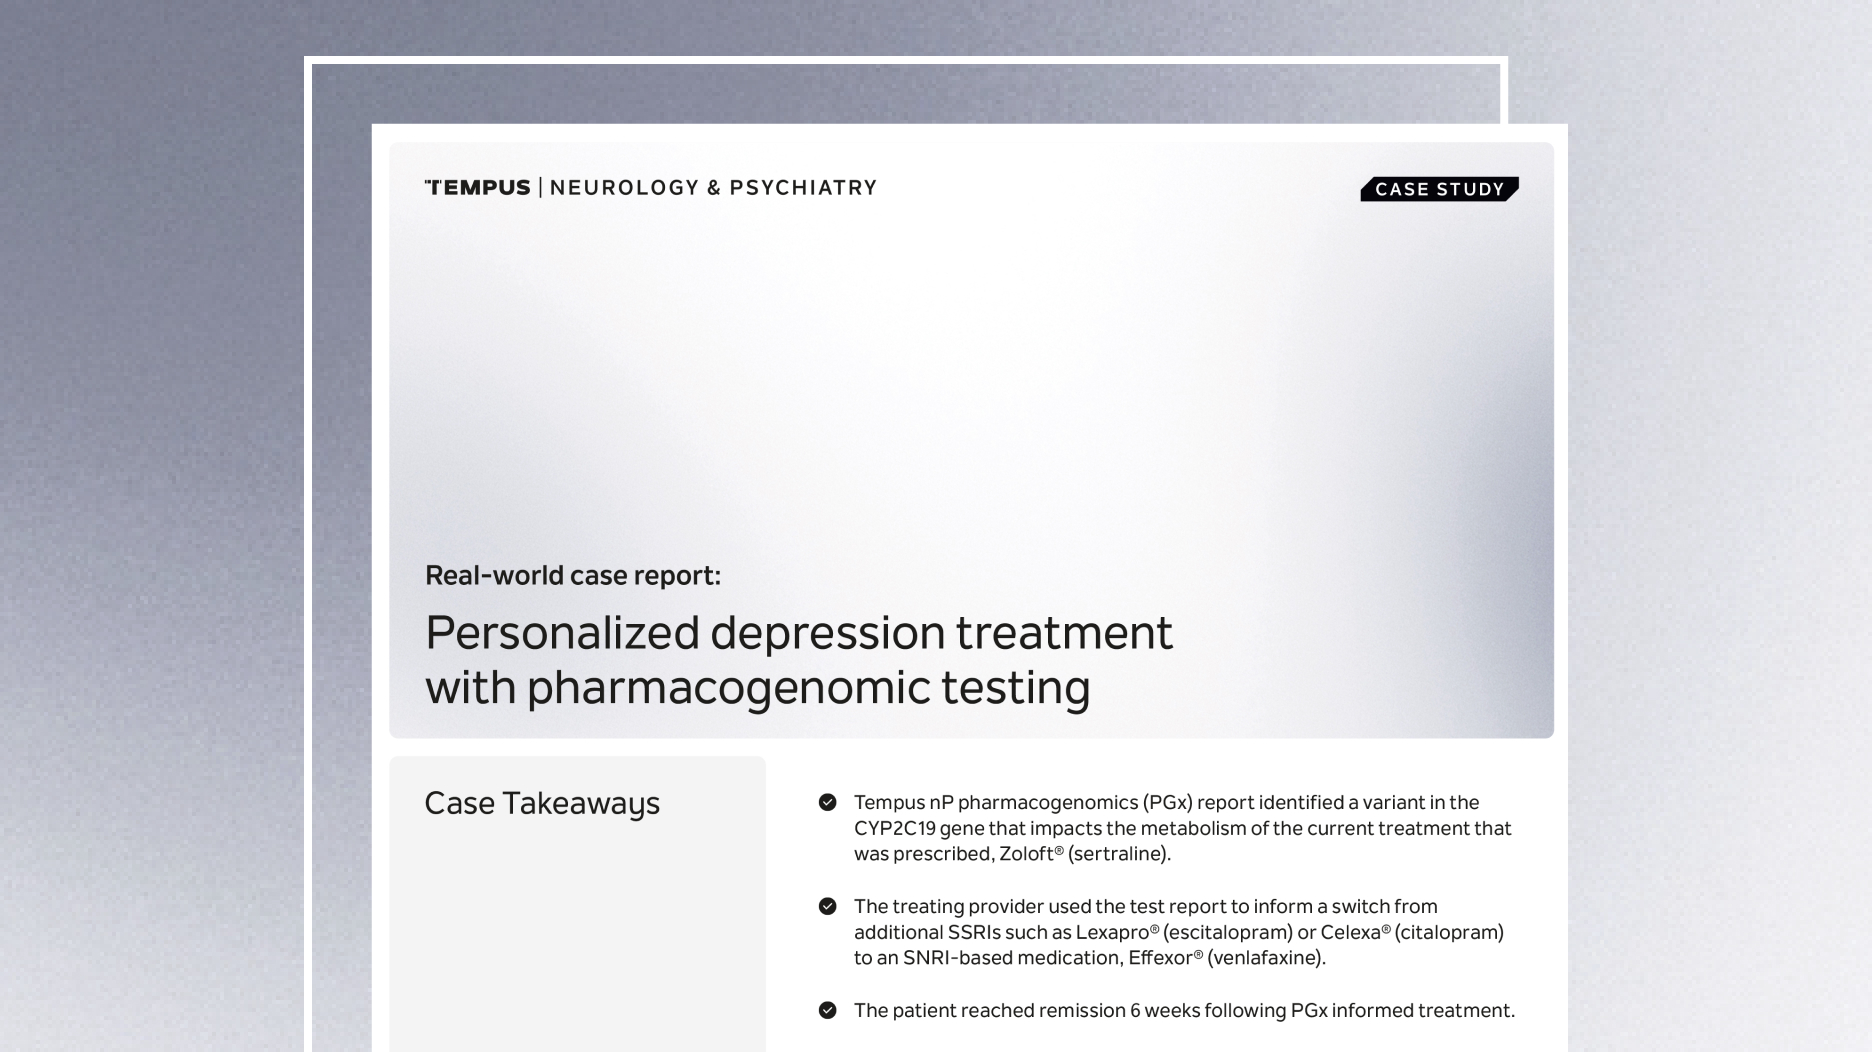 Personalized depression treatment with pharmacogenomic testing